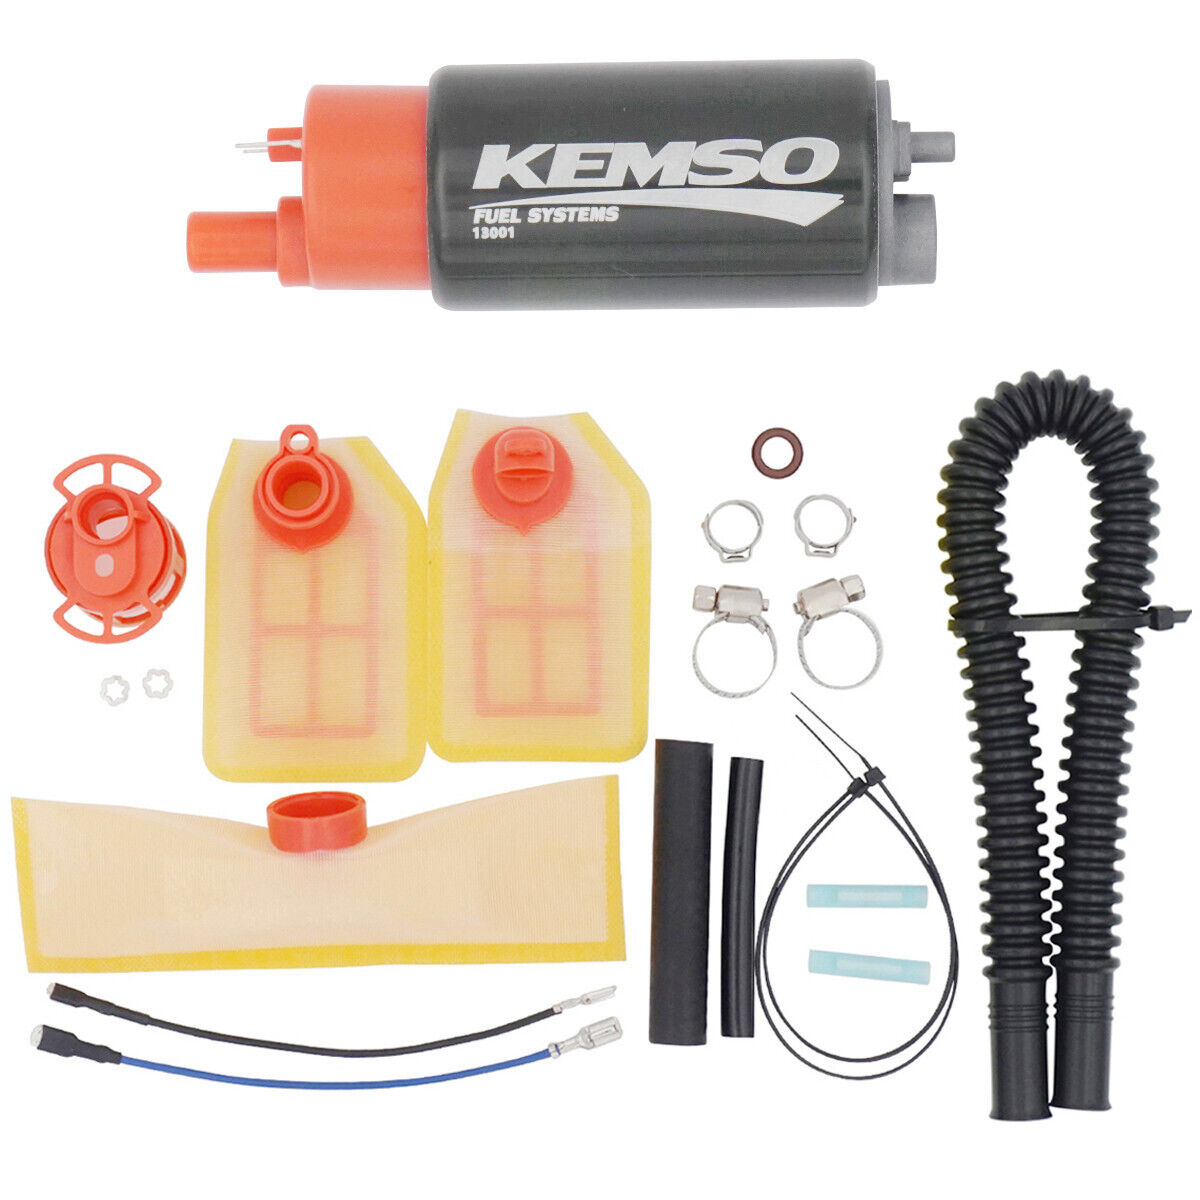 KEMSO 13001 High Performance 30mm Electric Fuel Pump & Install Kit